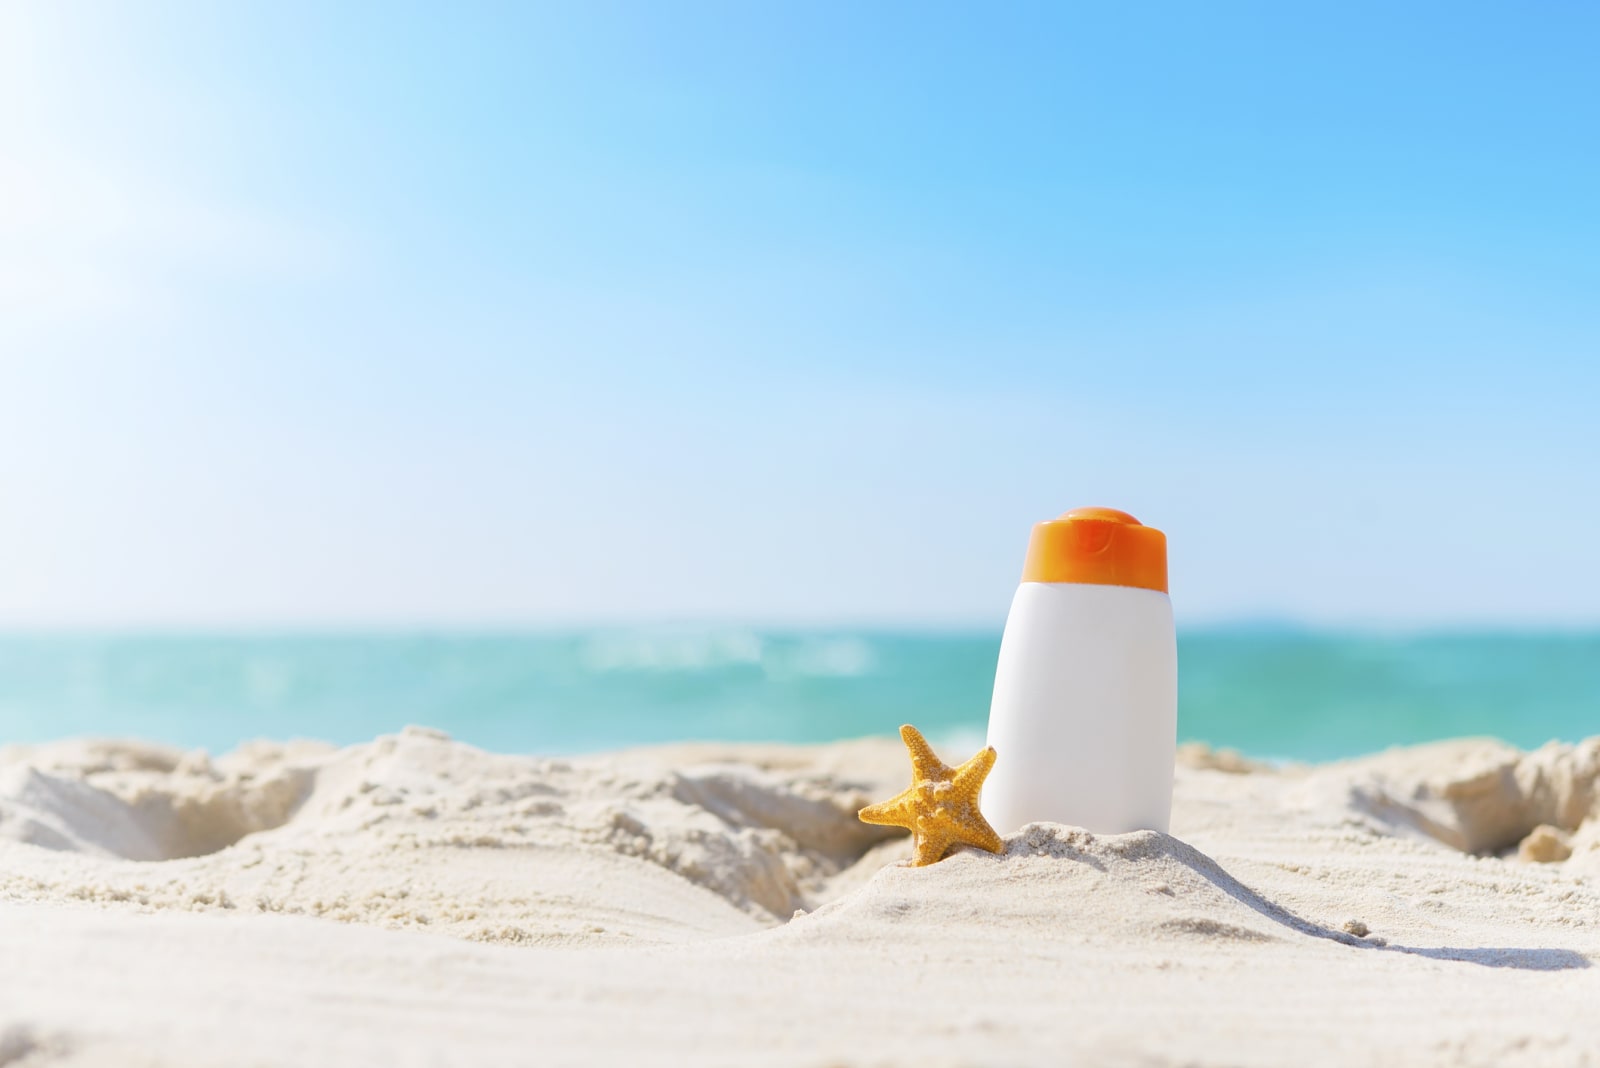 Sunscreen on beach